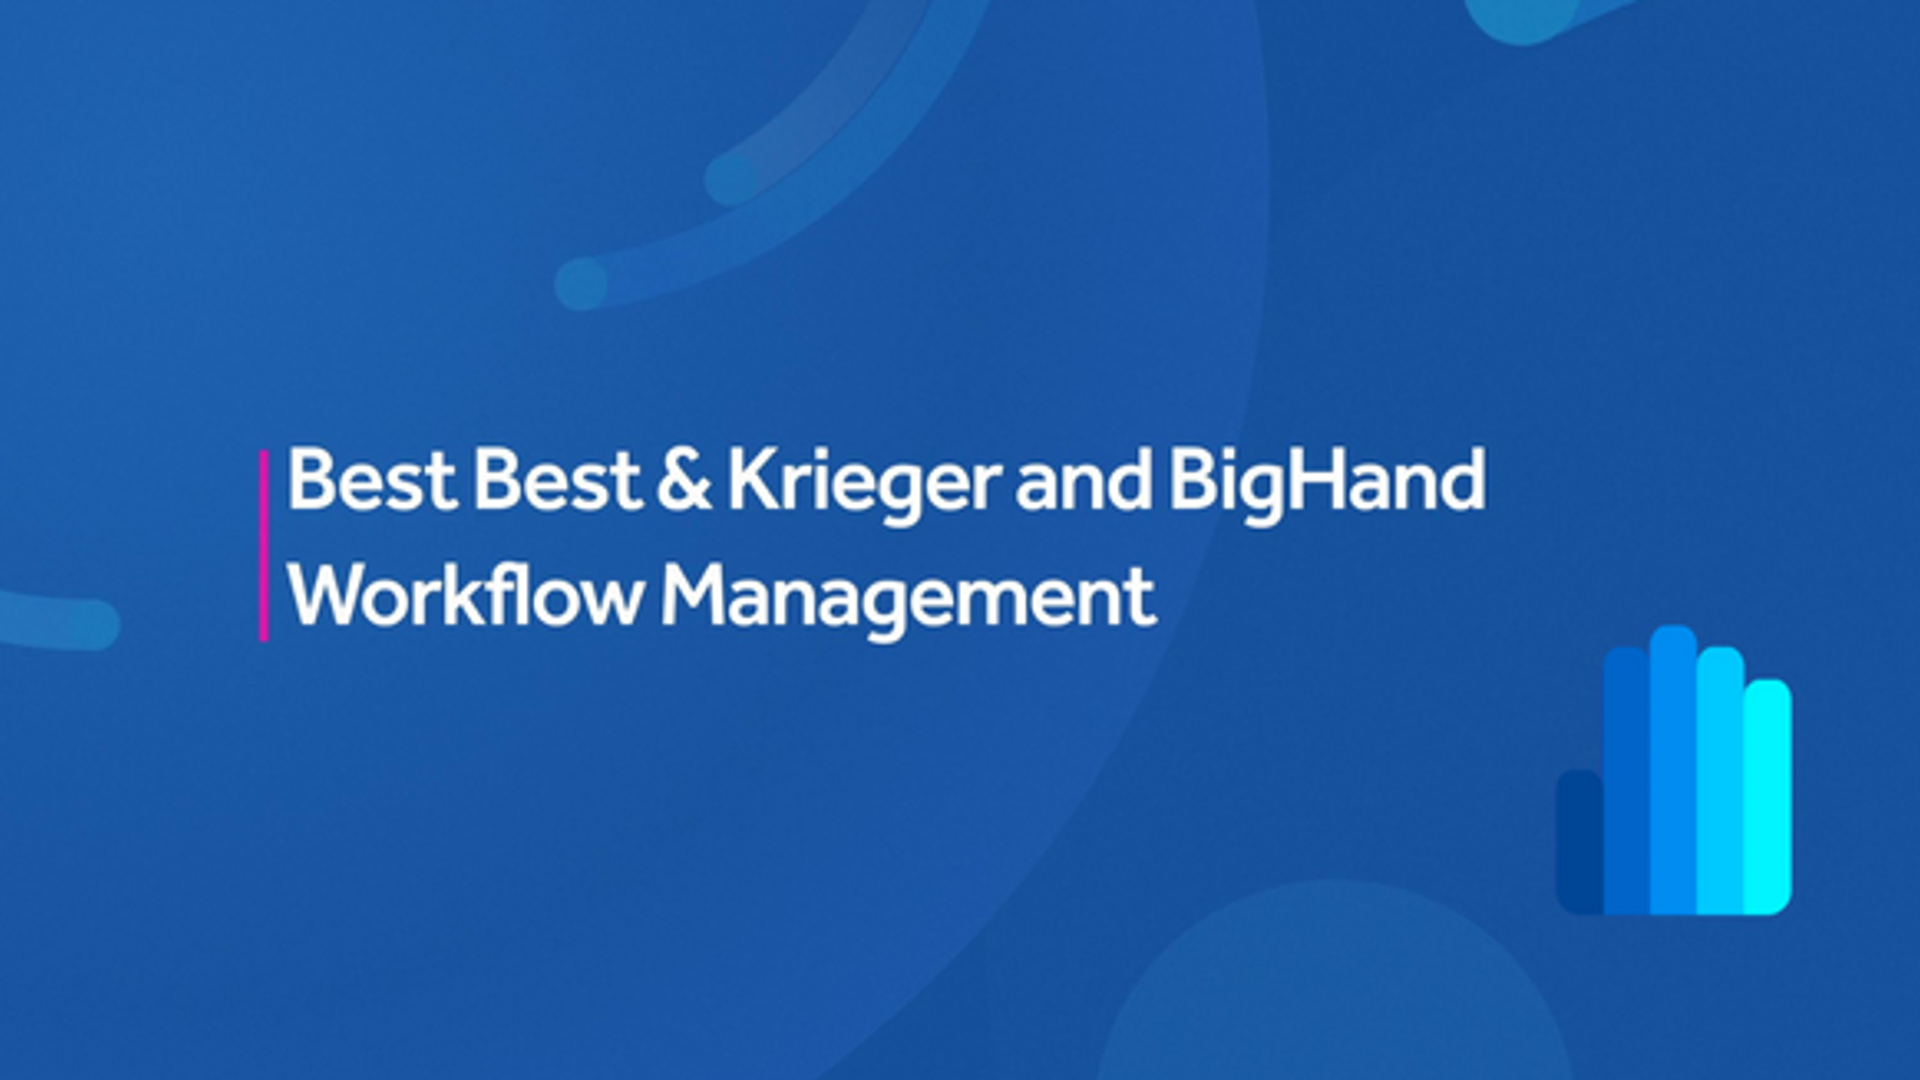 Client Testimonial - Workflow Management - Best Best and Krieger